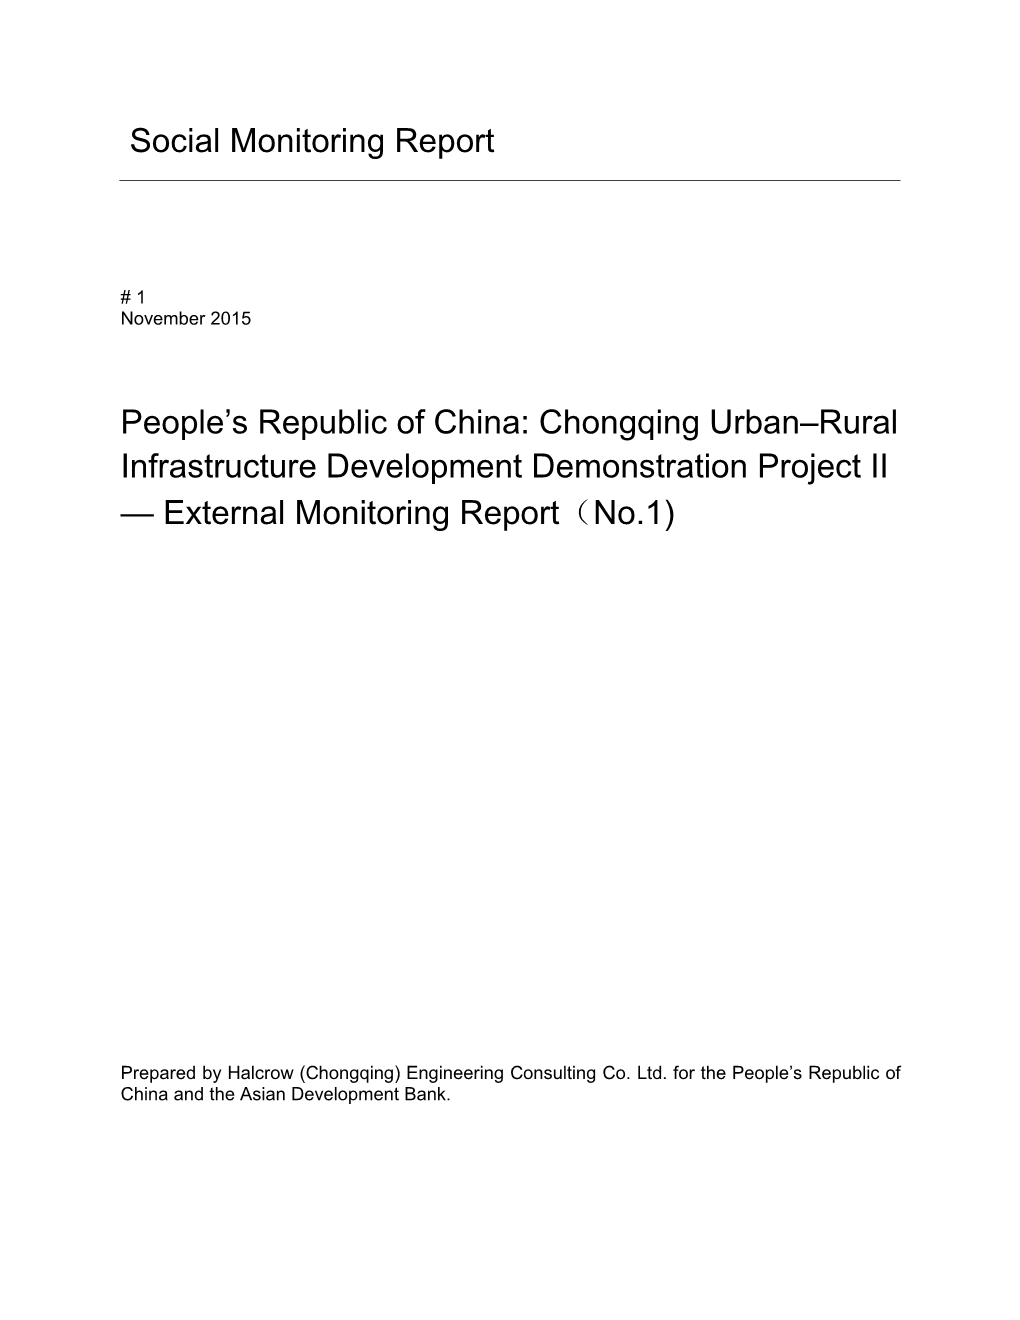 45509-002: Chongqing Urban–Rural Infrastructure Development